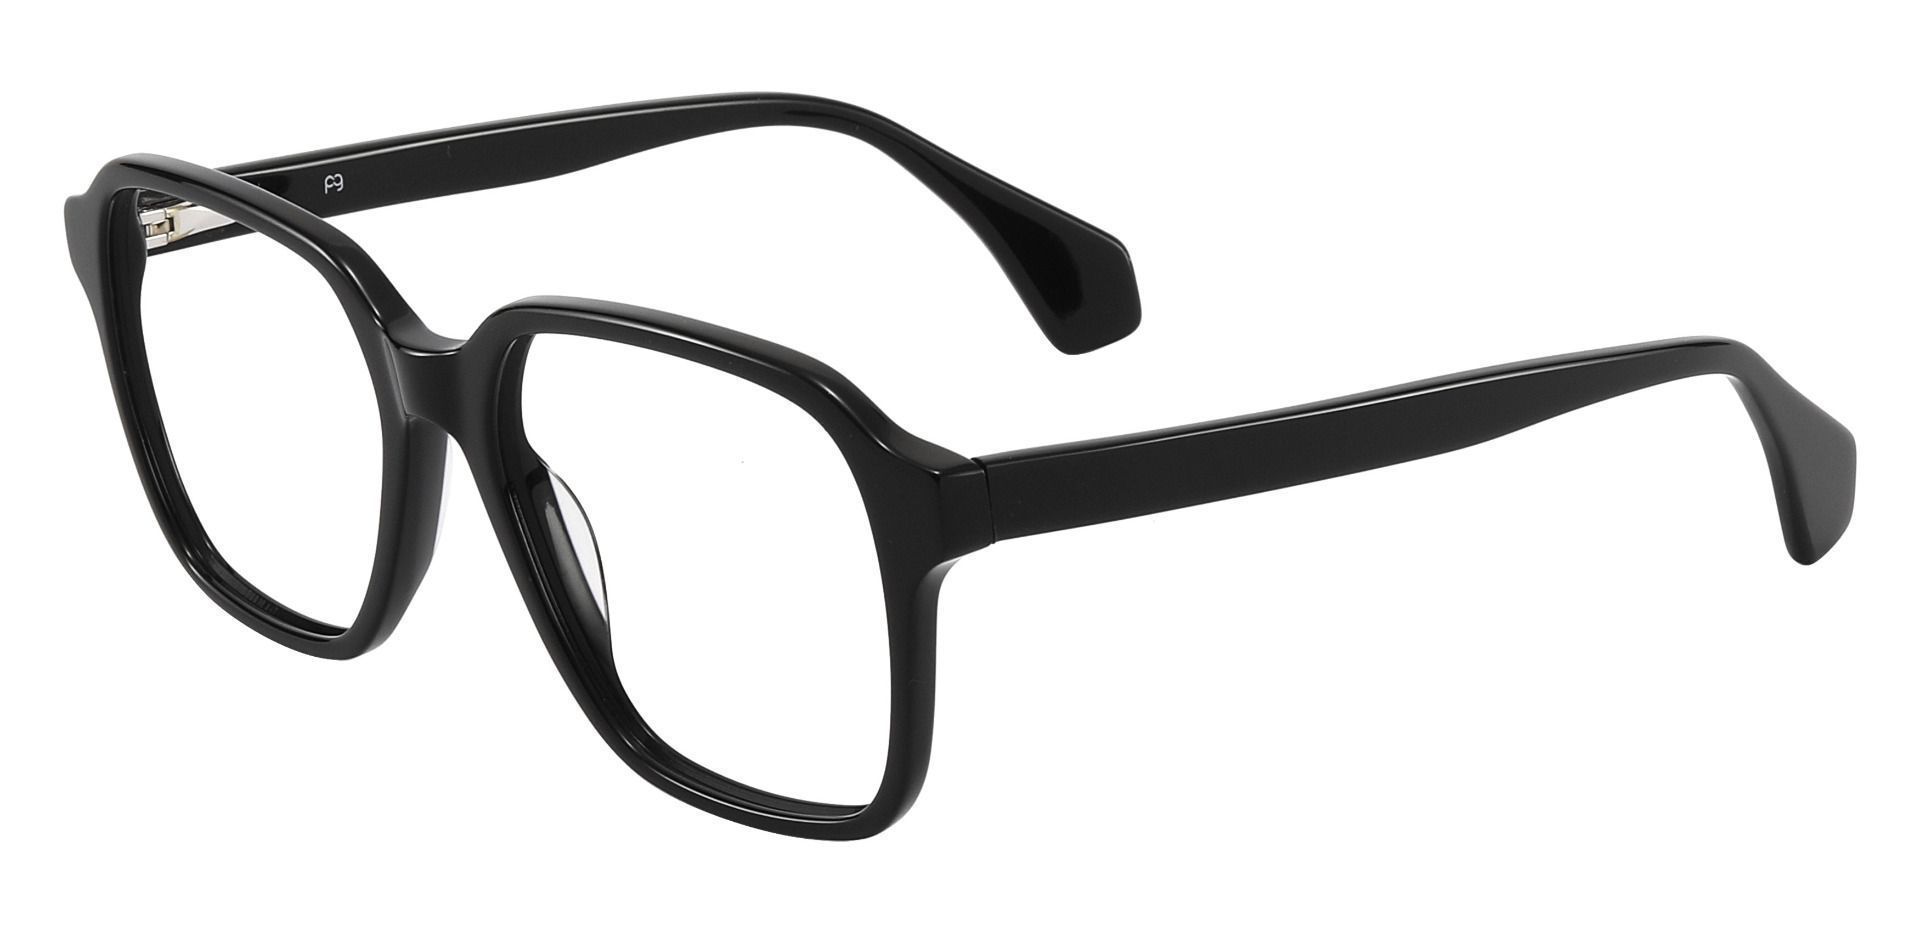 Renovo Square Progressive Glasses - Black